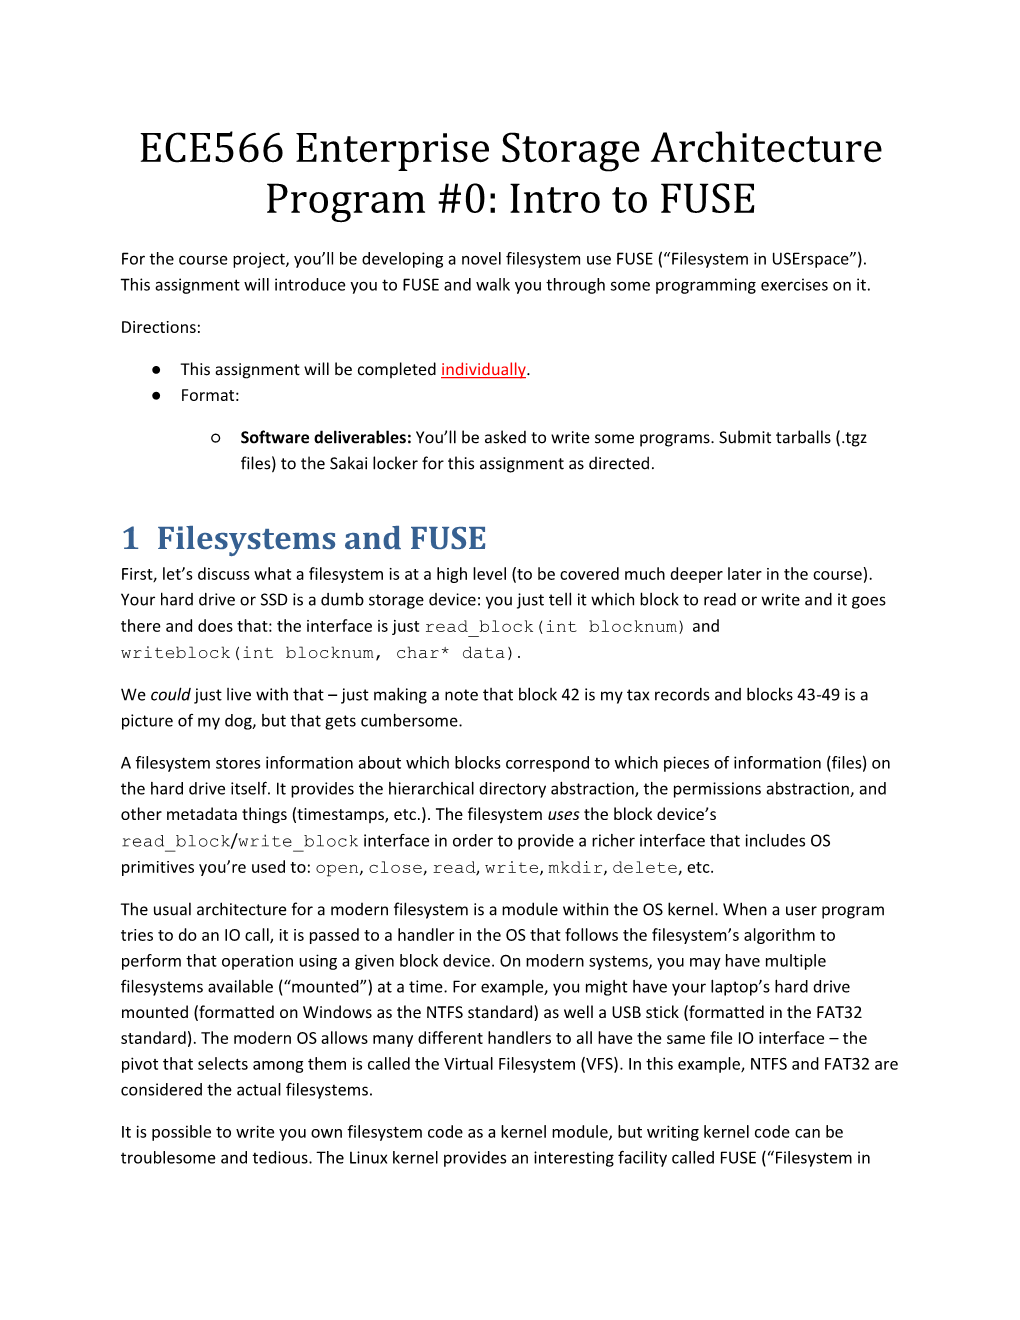 ECE566 Enterprise Storage Architecture Program #0: Intro to FUSE